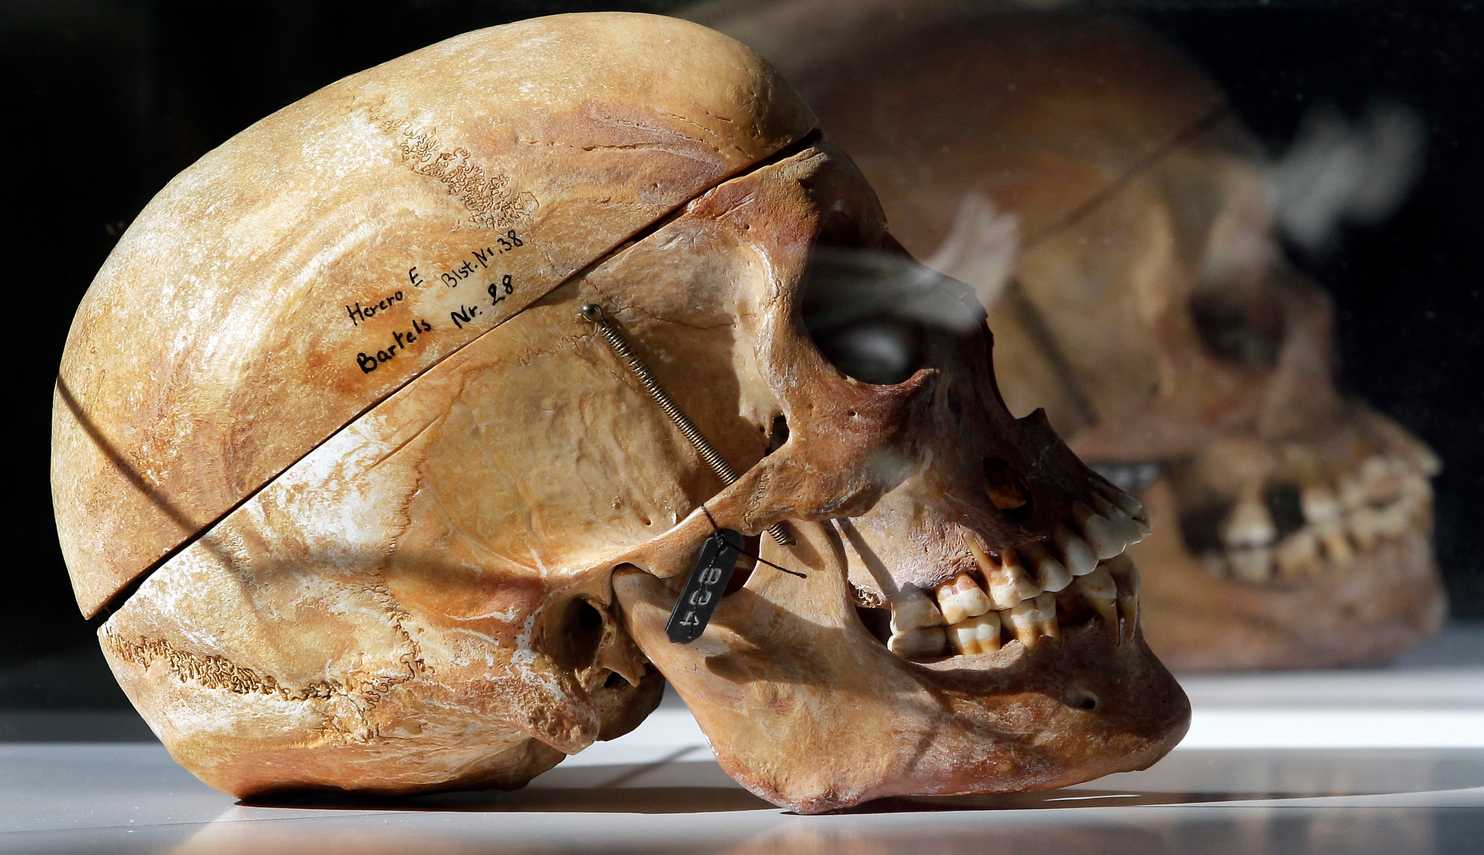 Human skulls from Africa investigated by international team in Berlin